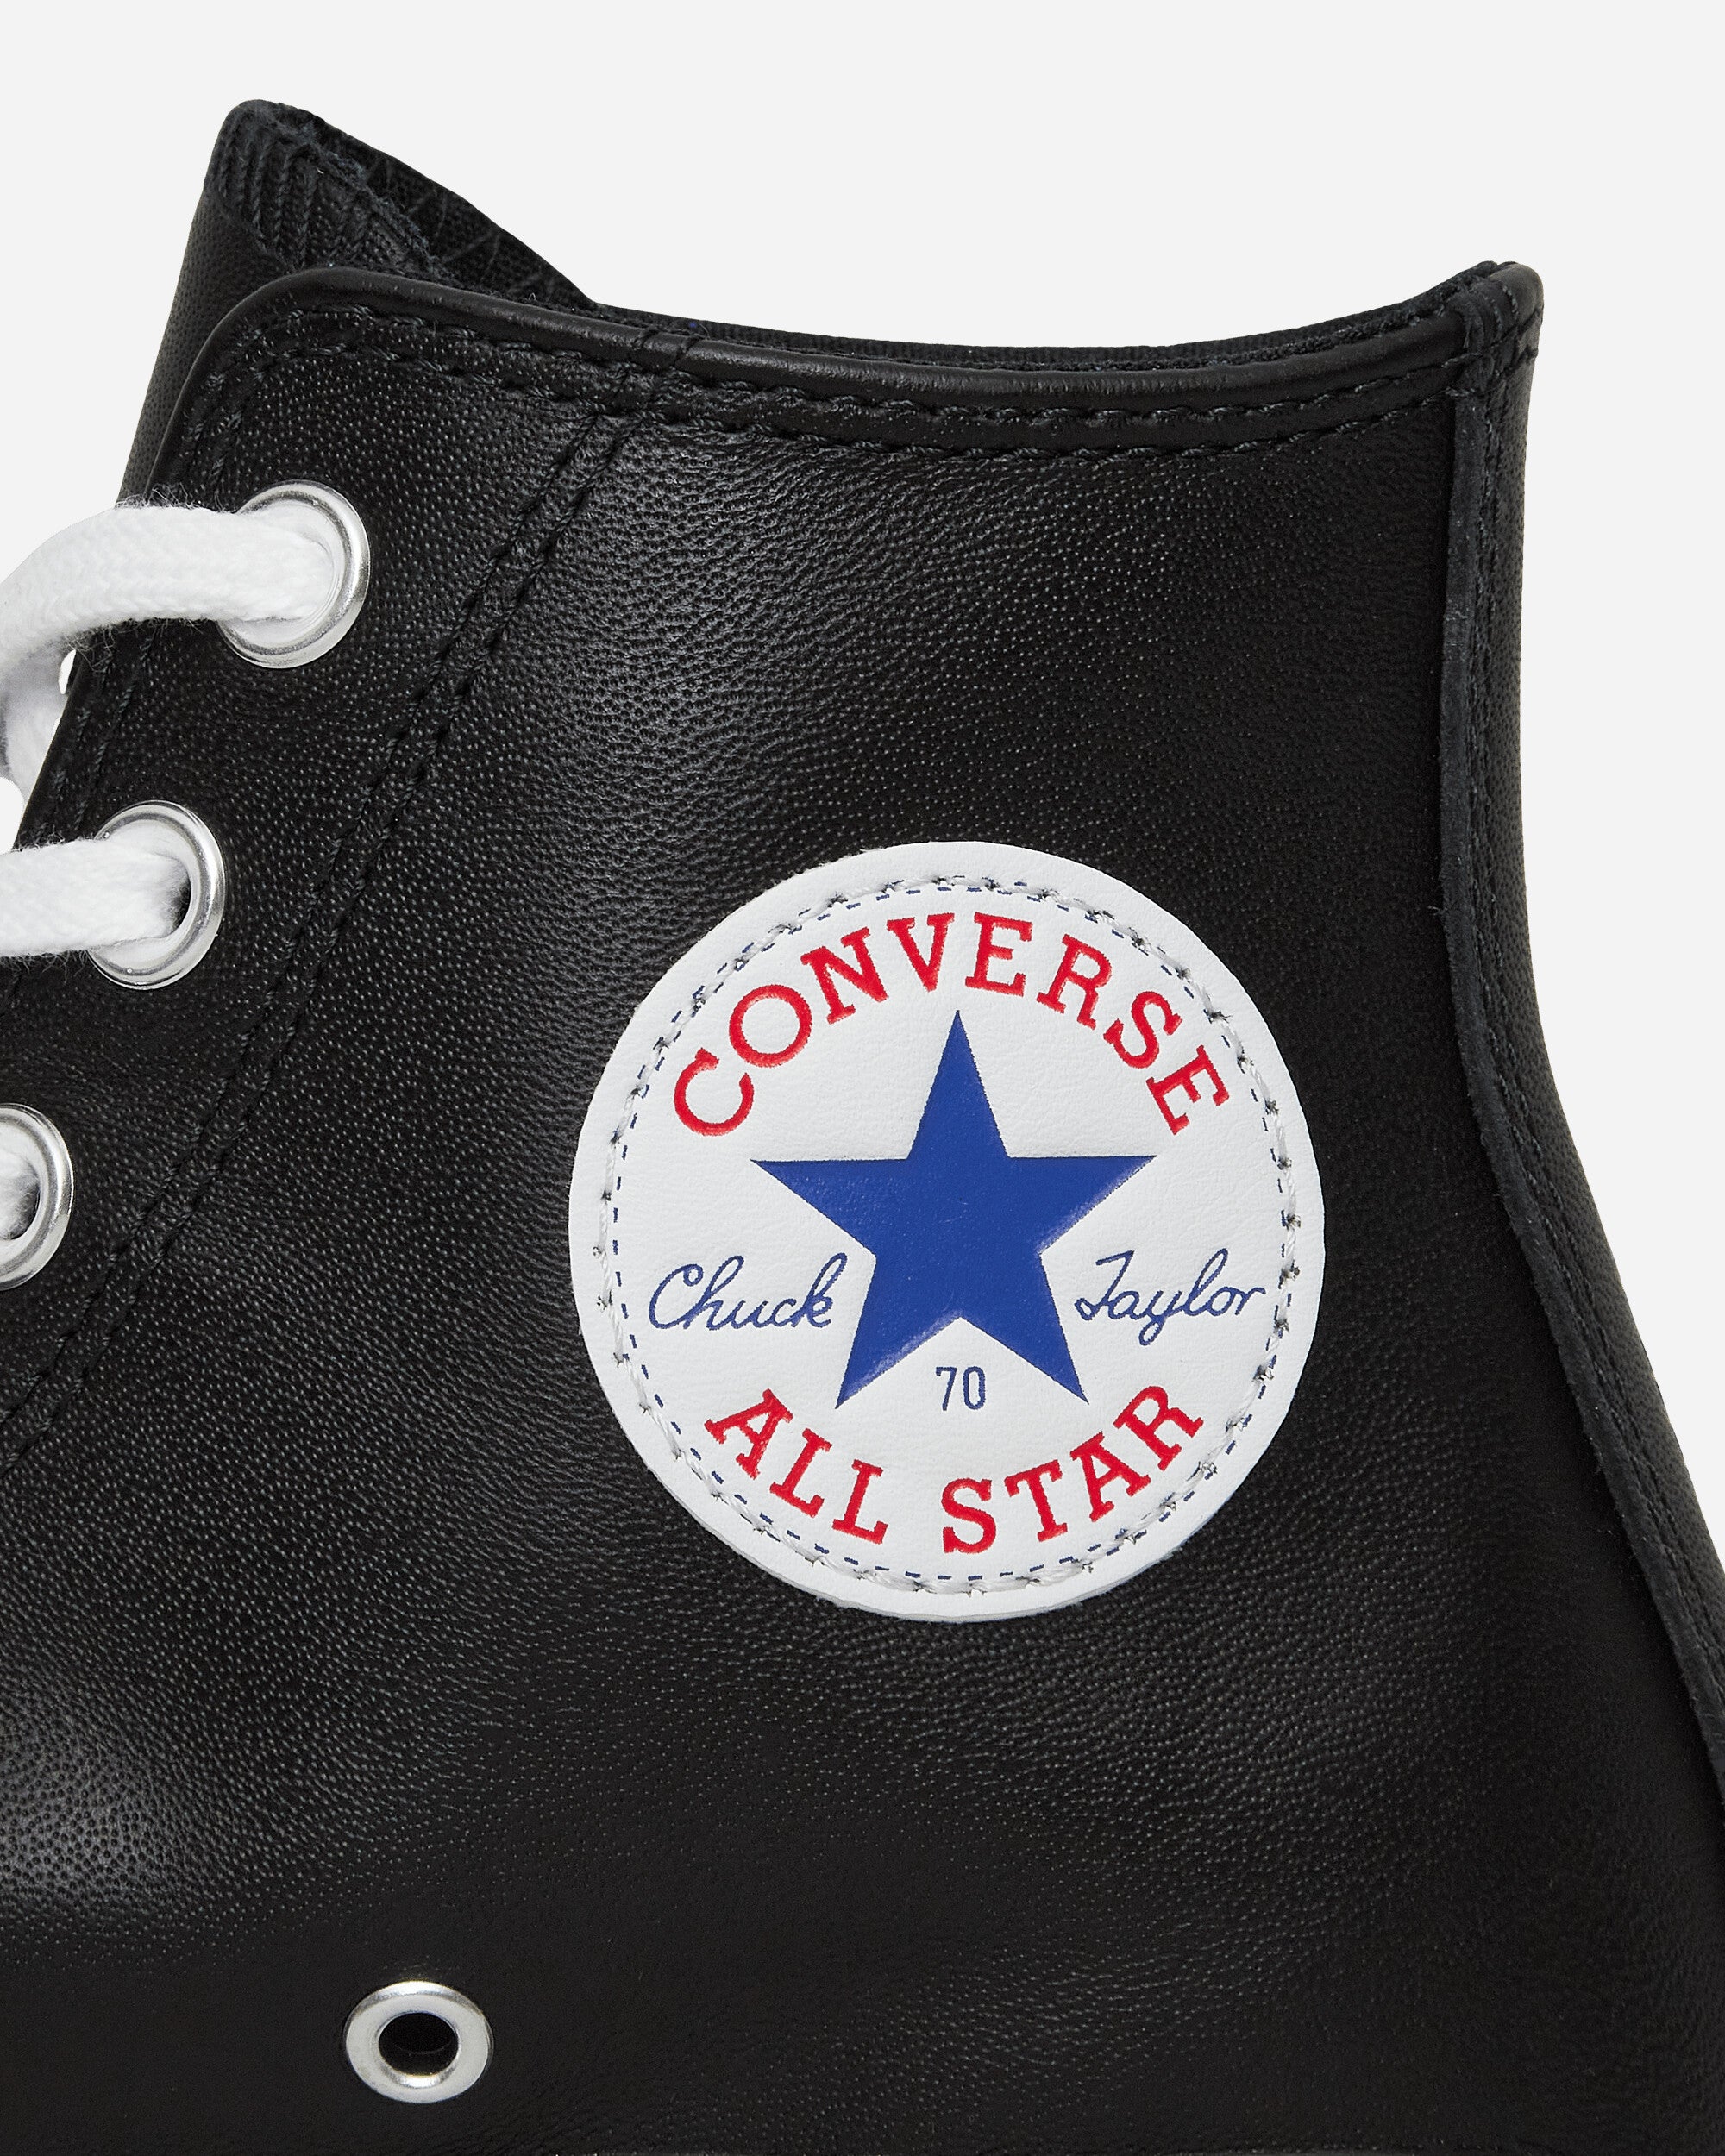 Converse Chuck 70 Black/White/Egret Sneakers High A07200C